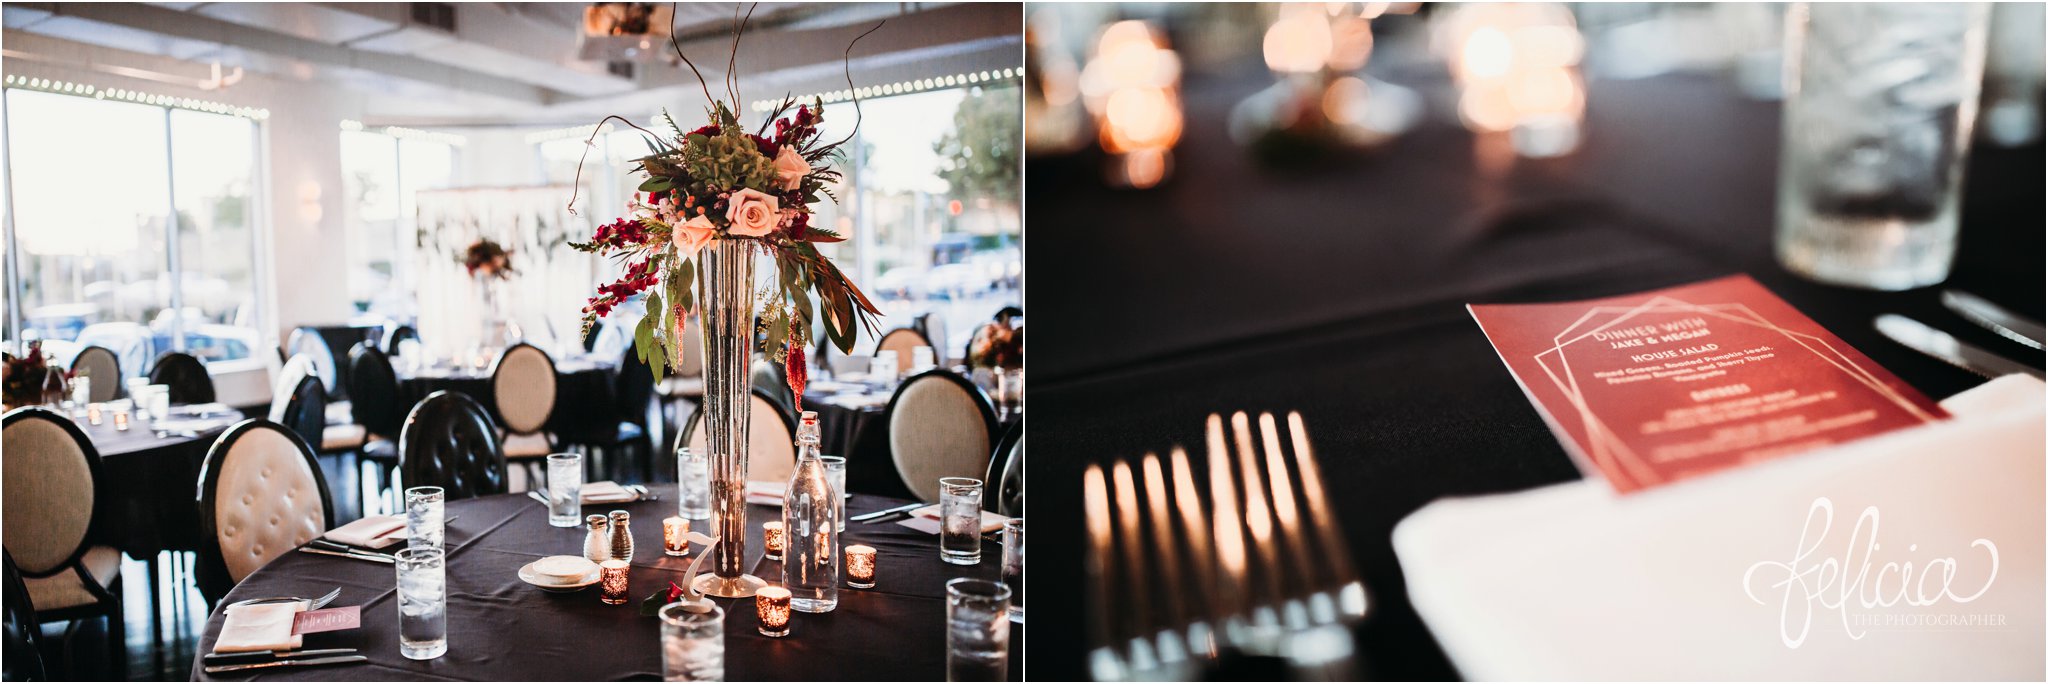 images by feliciathephotographer.com | wedding photographer | kansas city | details | reception | rustic floral center pieces | place seatings | classic | 